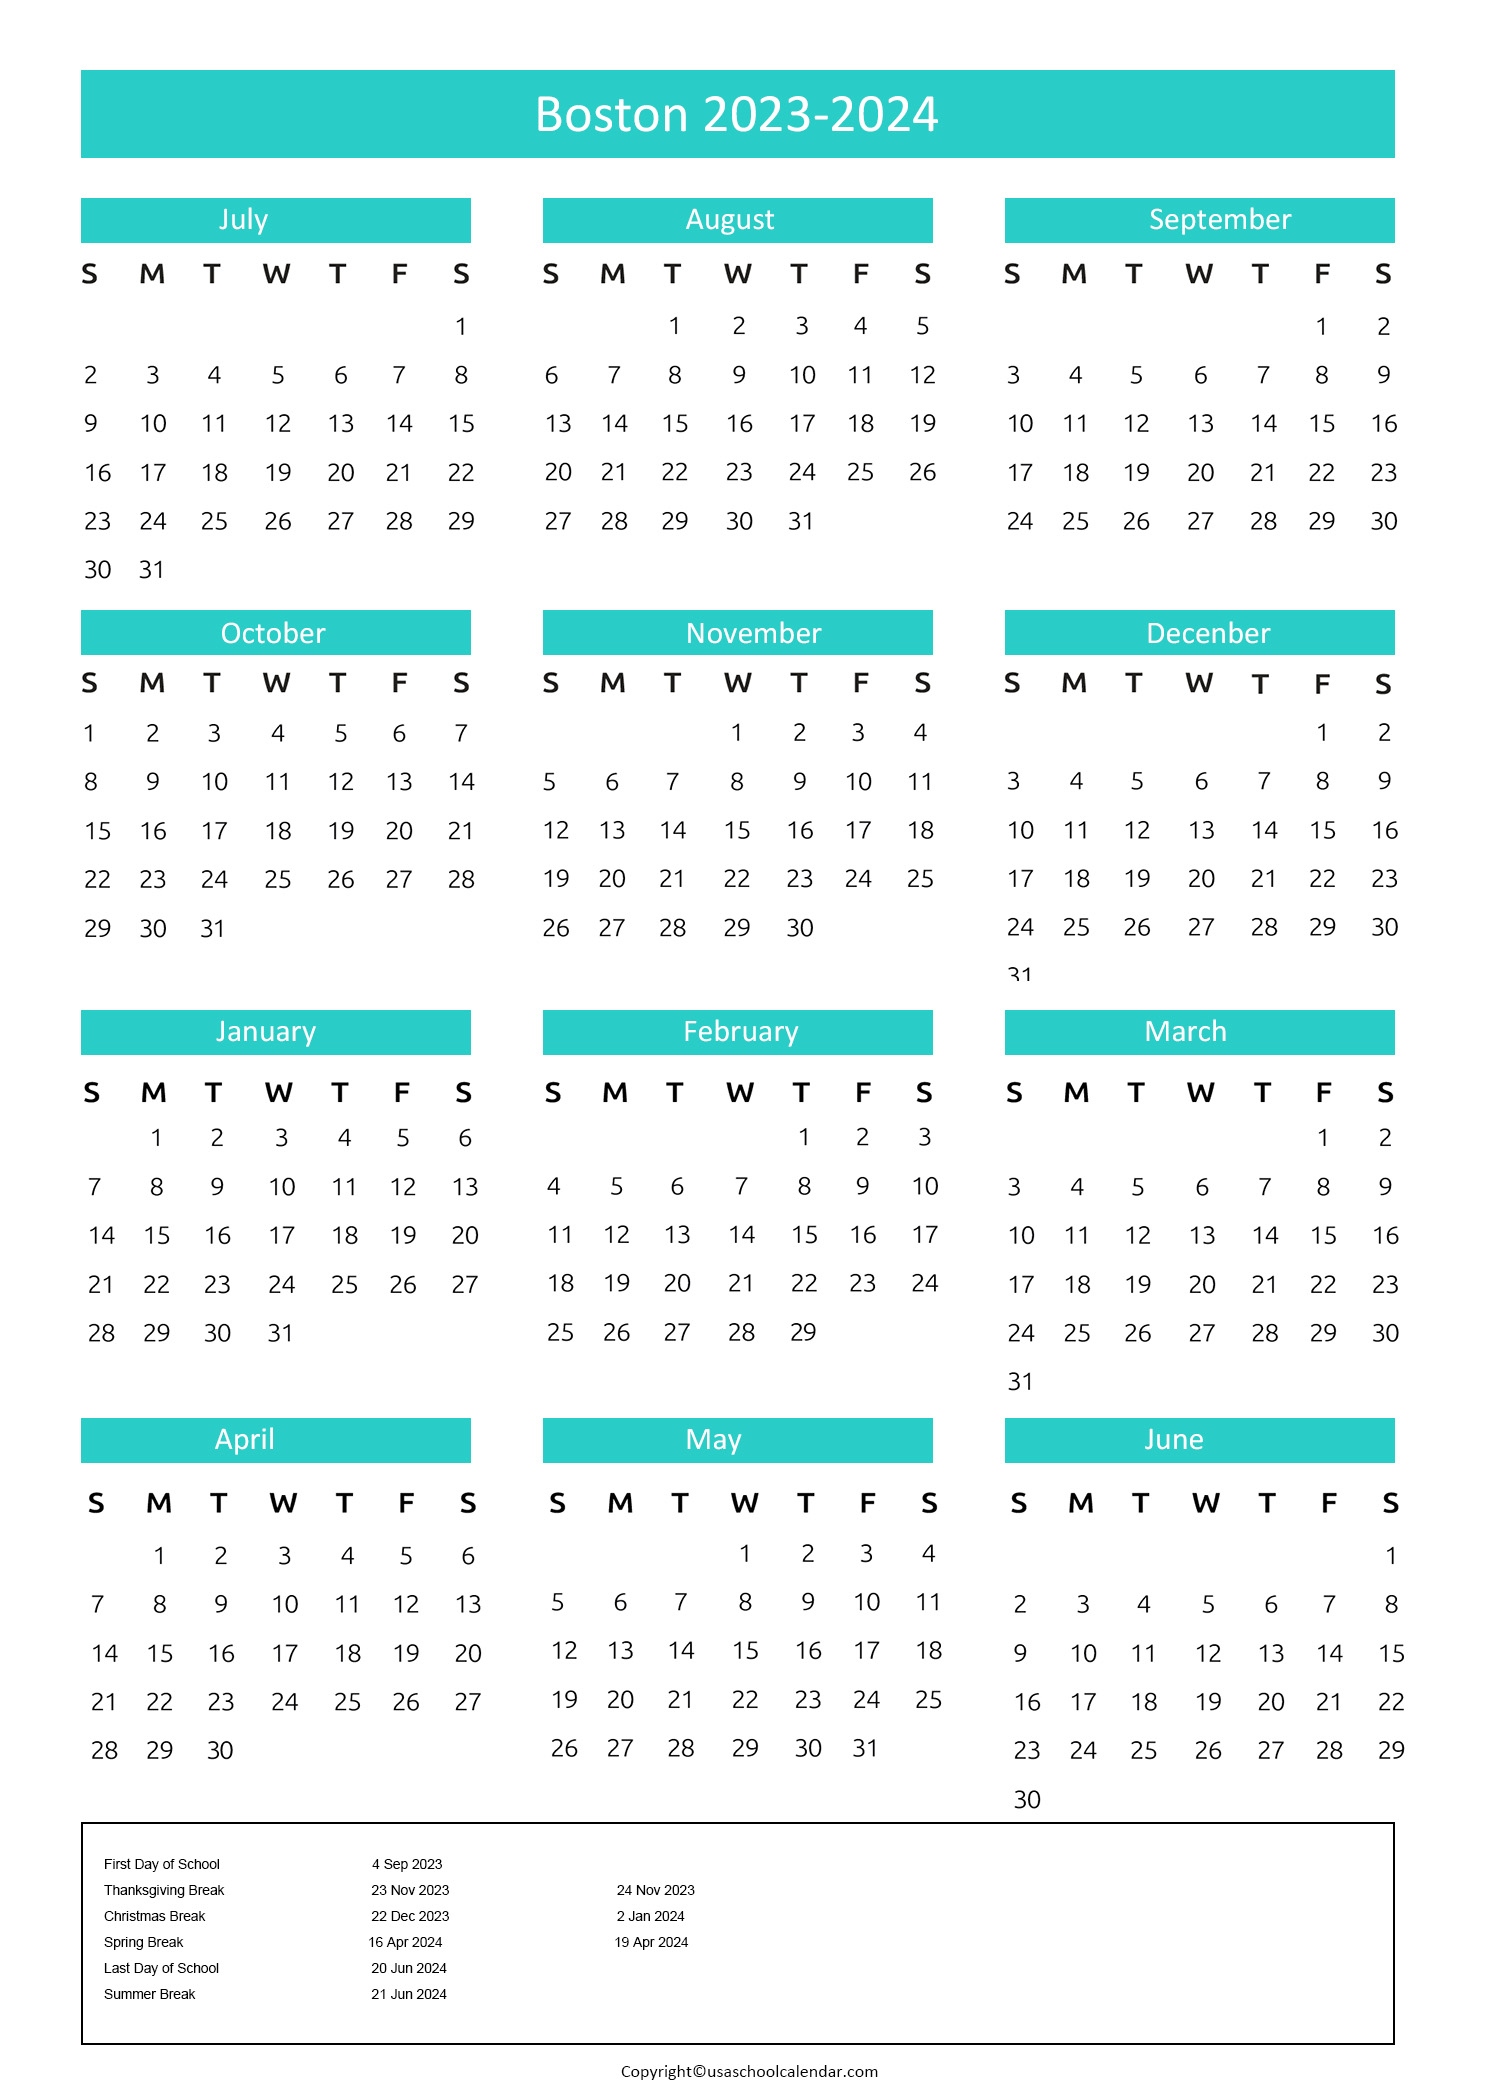 Boston Public Schools Calendar And Holidays 2023 2024